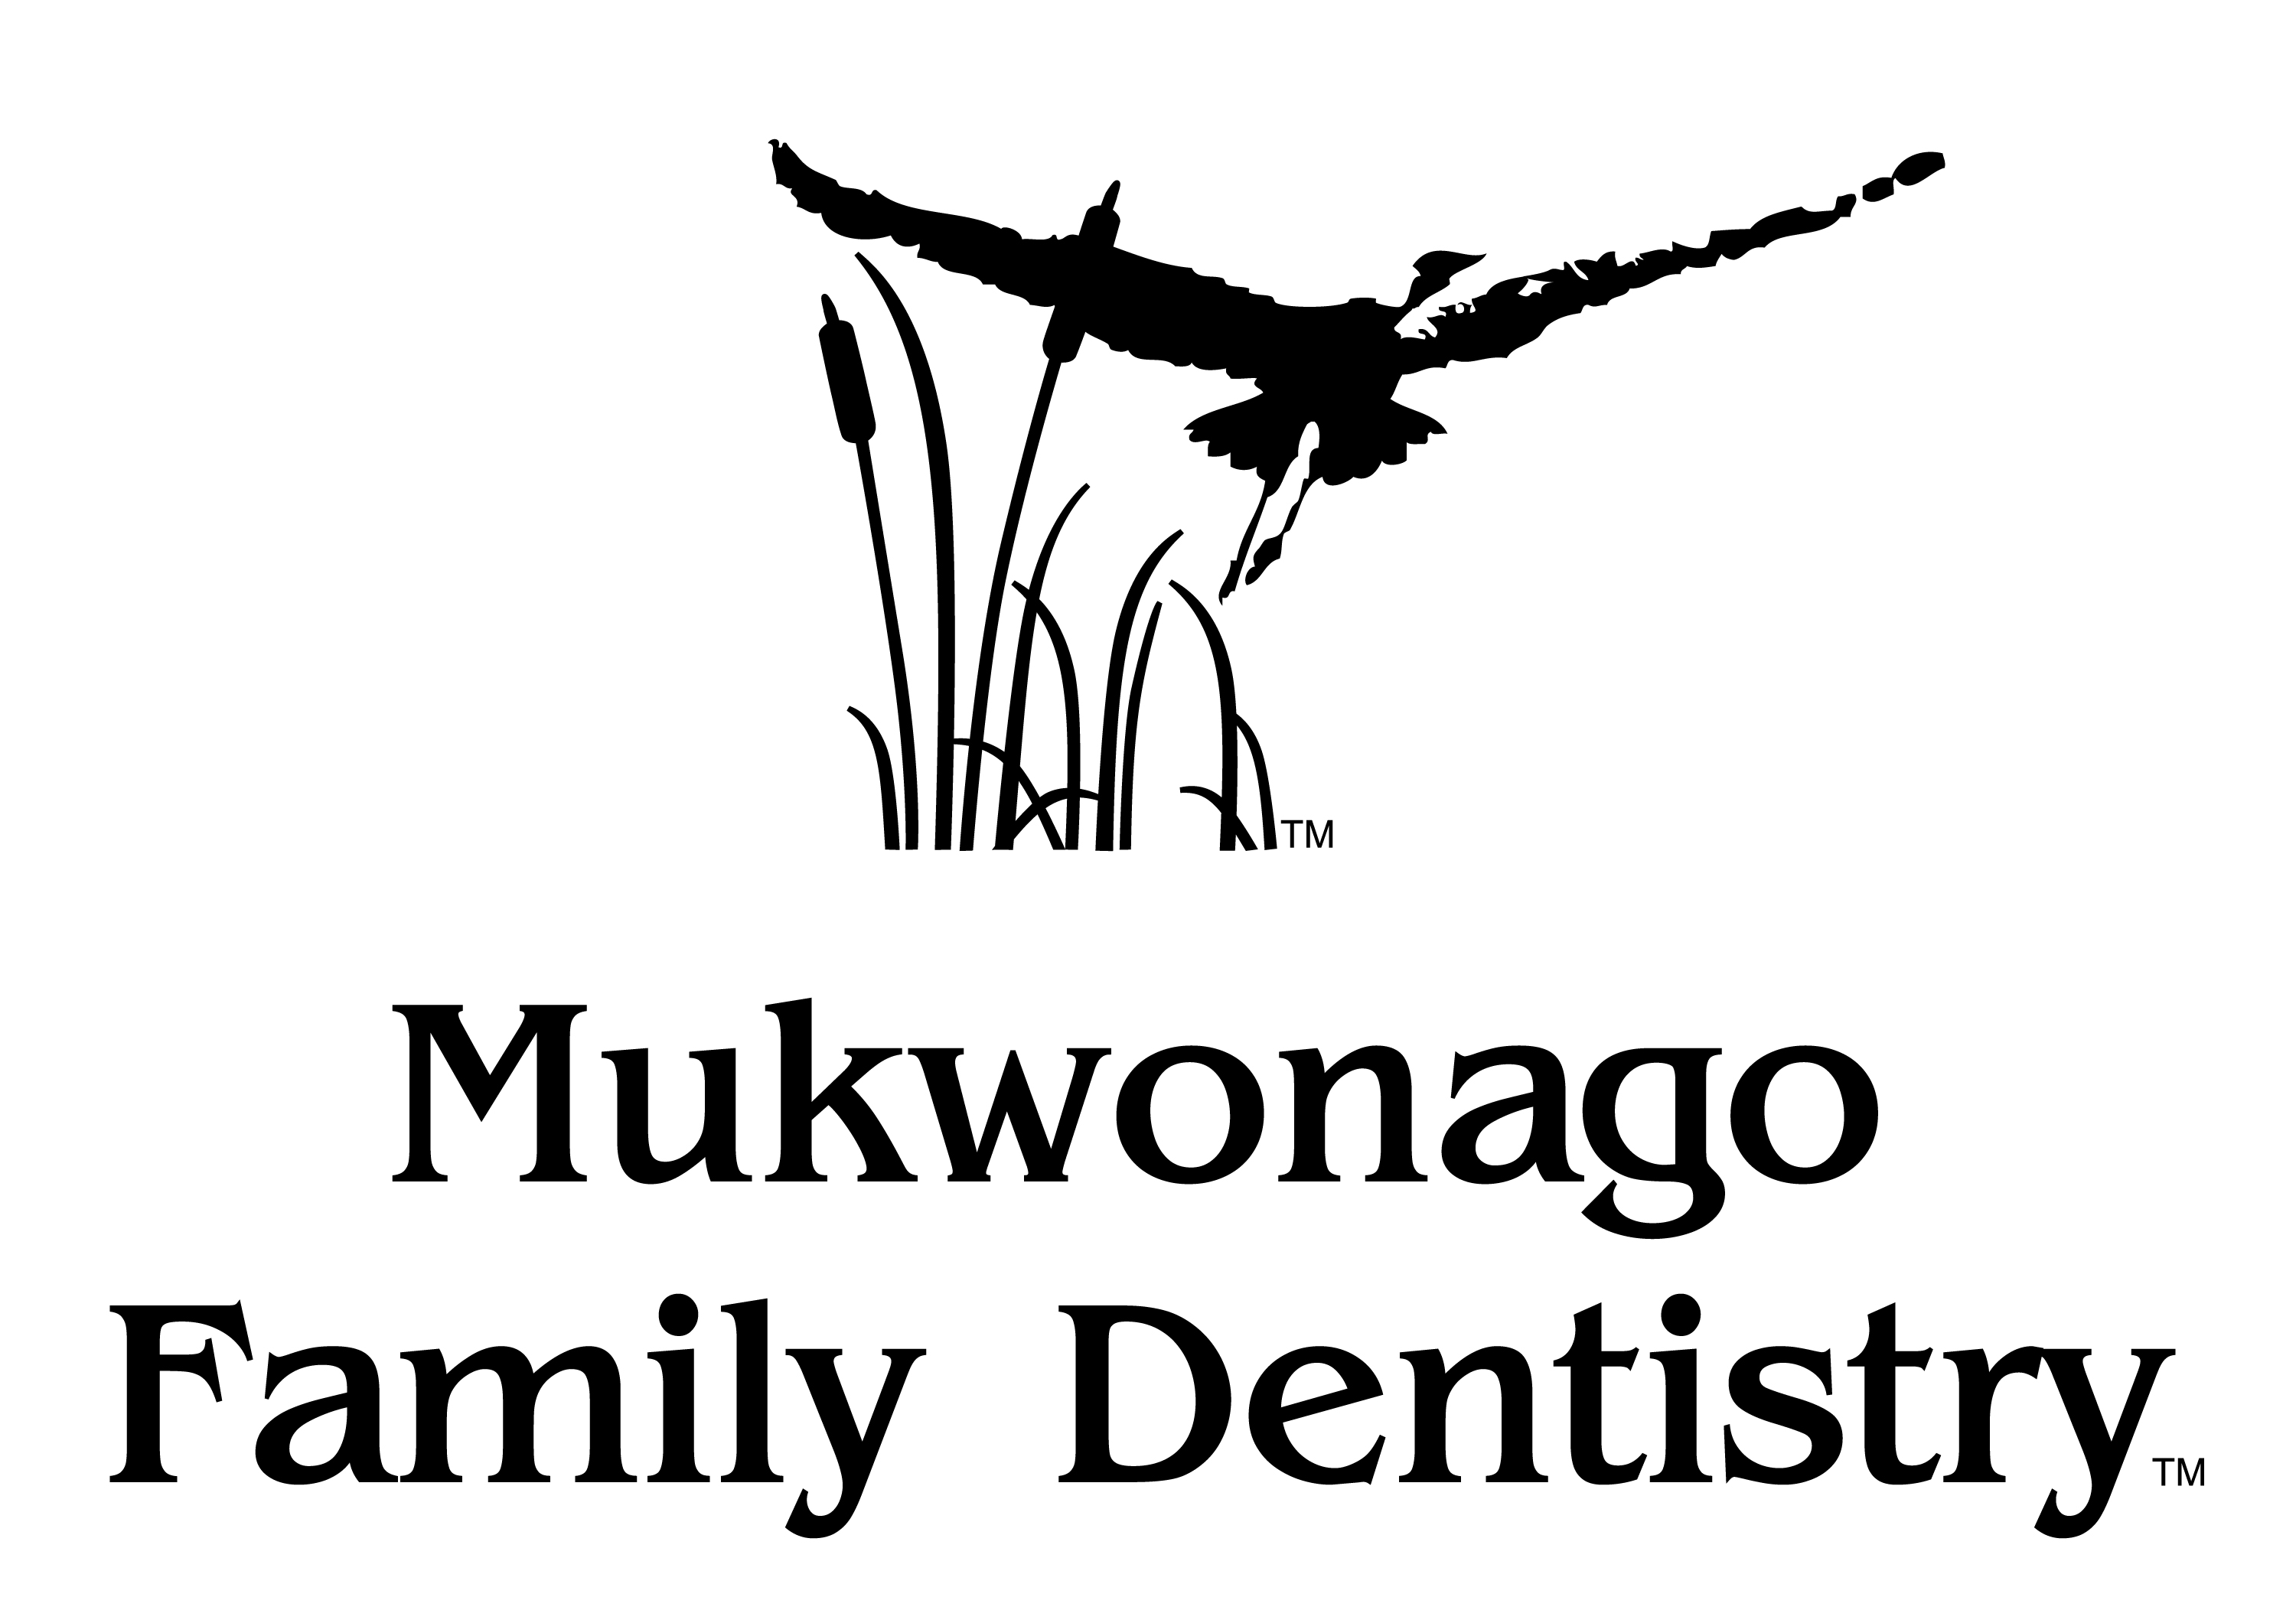 Mukwonago Family Dentistry